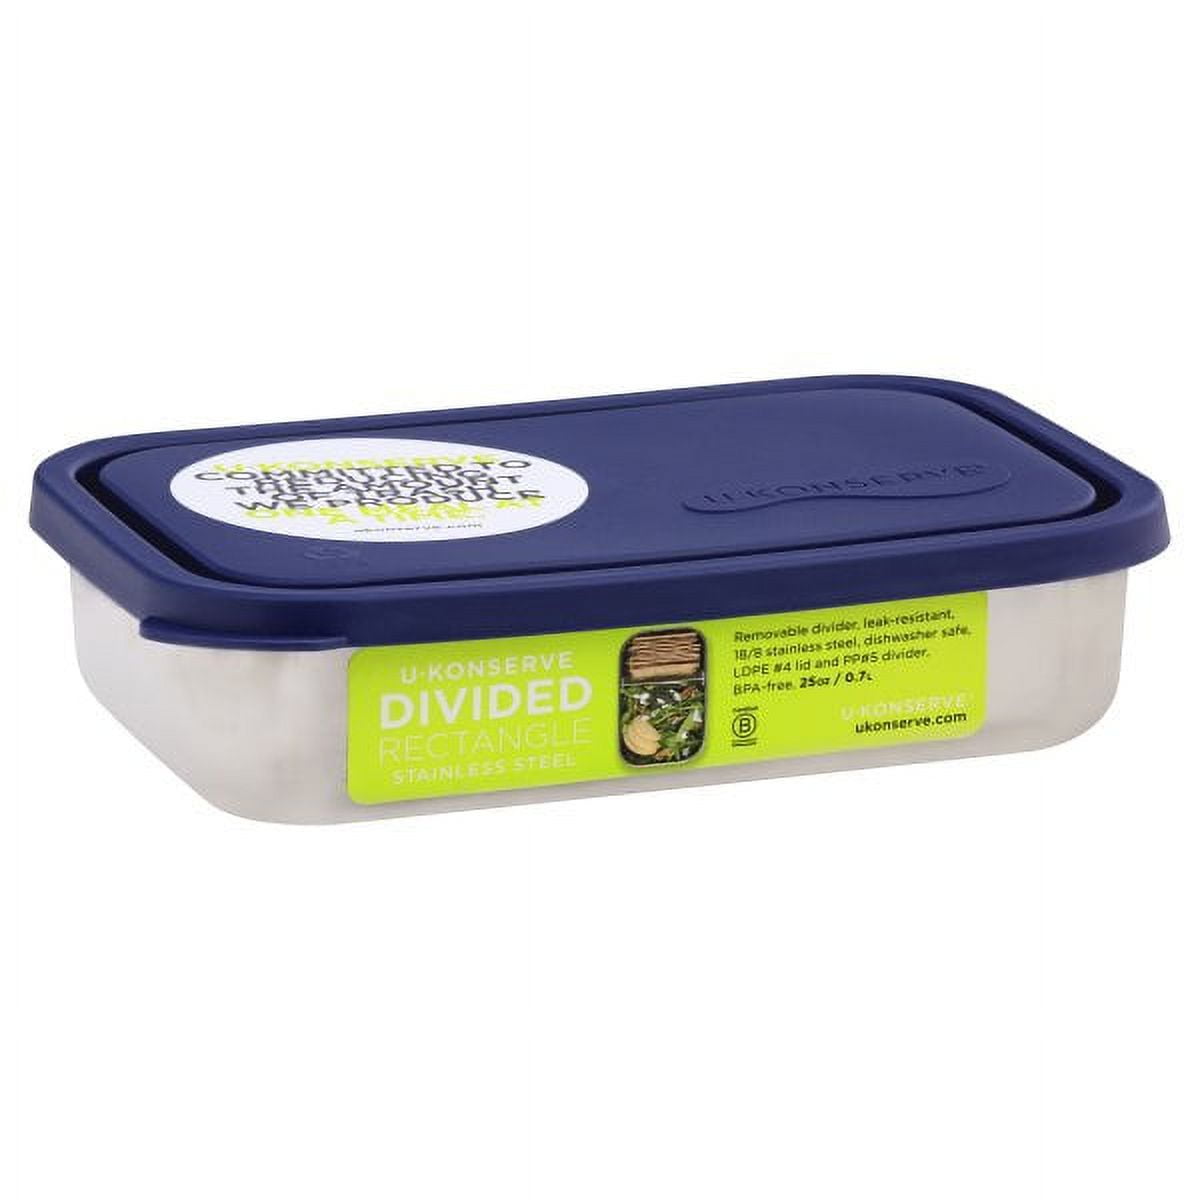 U-Konserve Stainless Steel Rectangle Food Storage Bento Box Container, Leak Proof Silicone Lid Dishwasher Safe - Plastic Free, 25oz (Blue Lid)